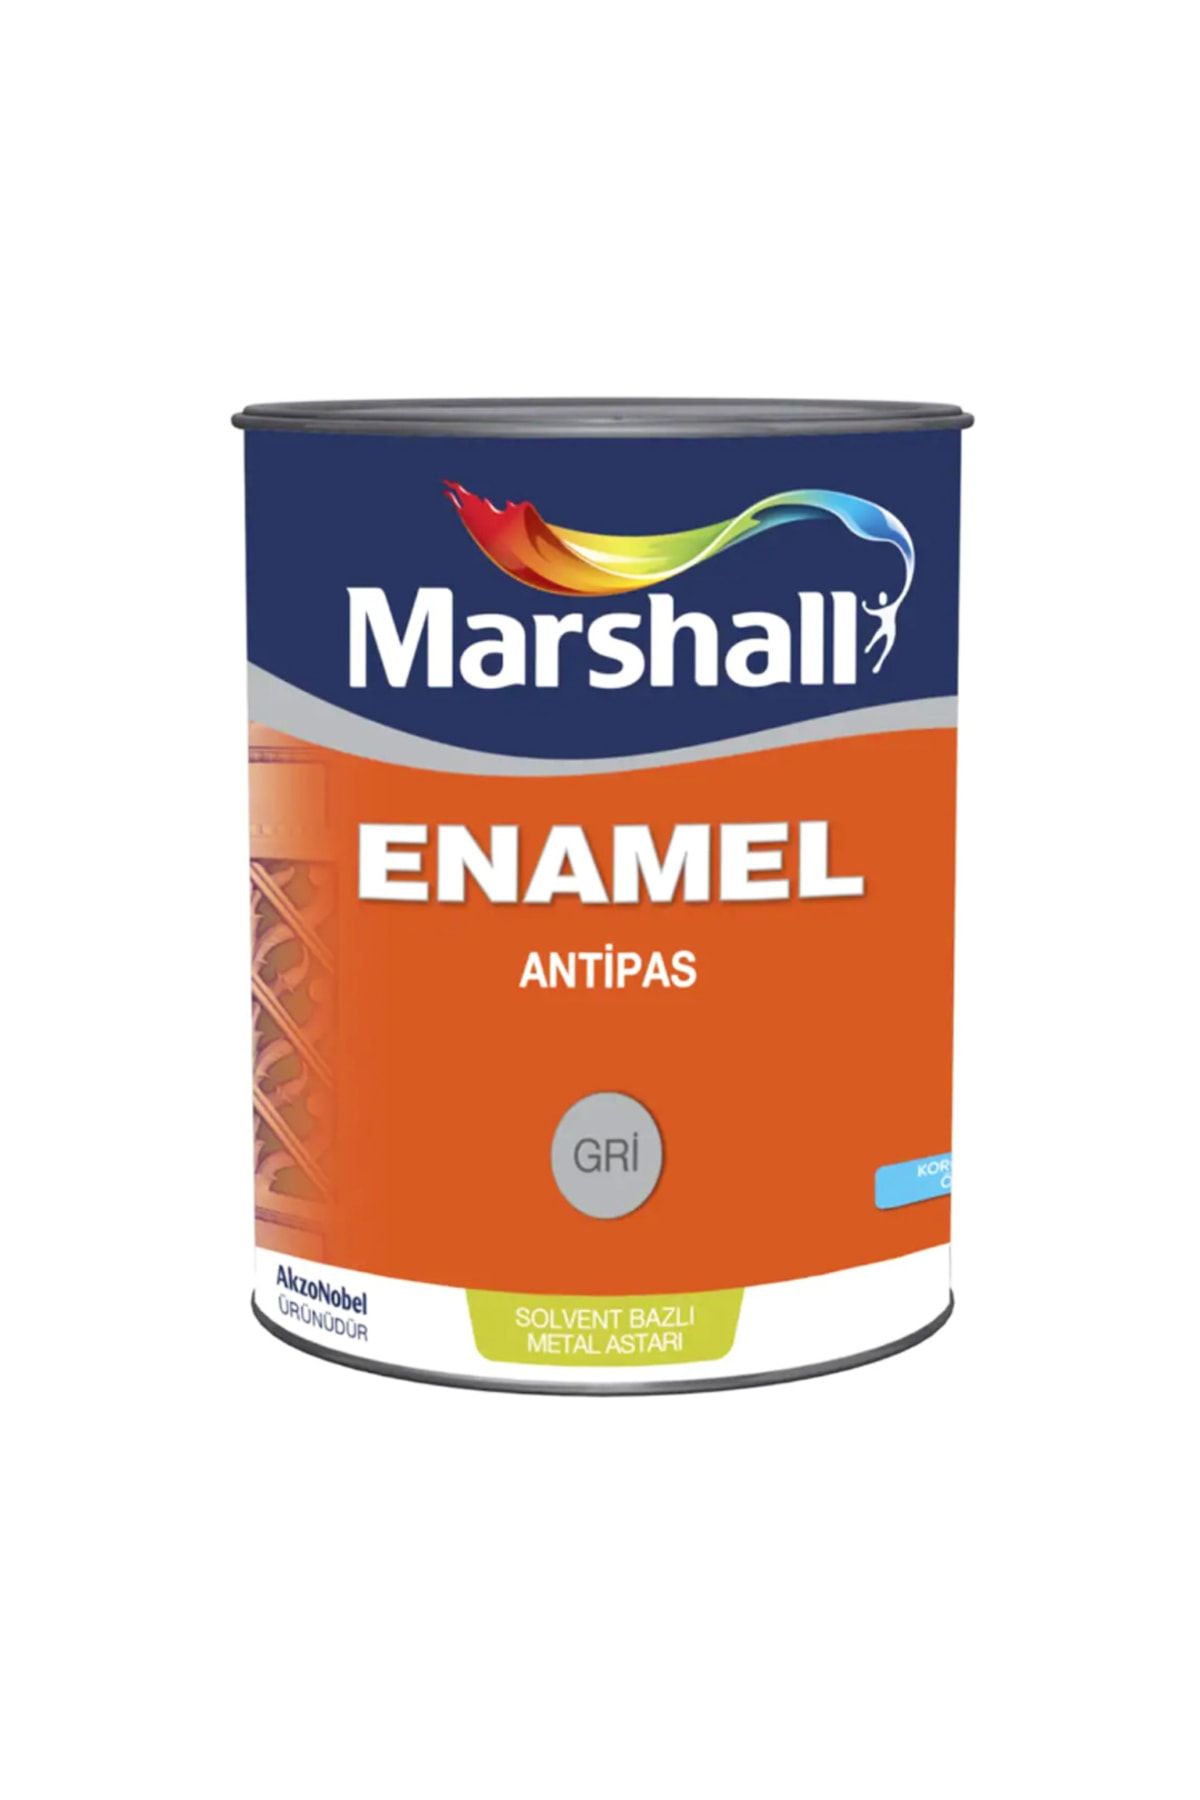 Marshall Enamel Antipas Gri 1kg Solvent Bazlı Metal Astarı